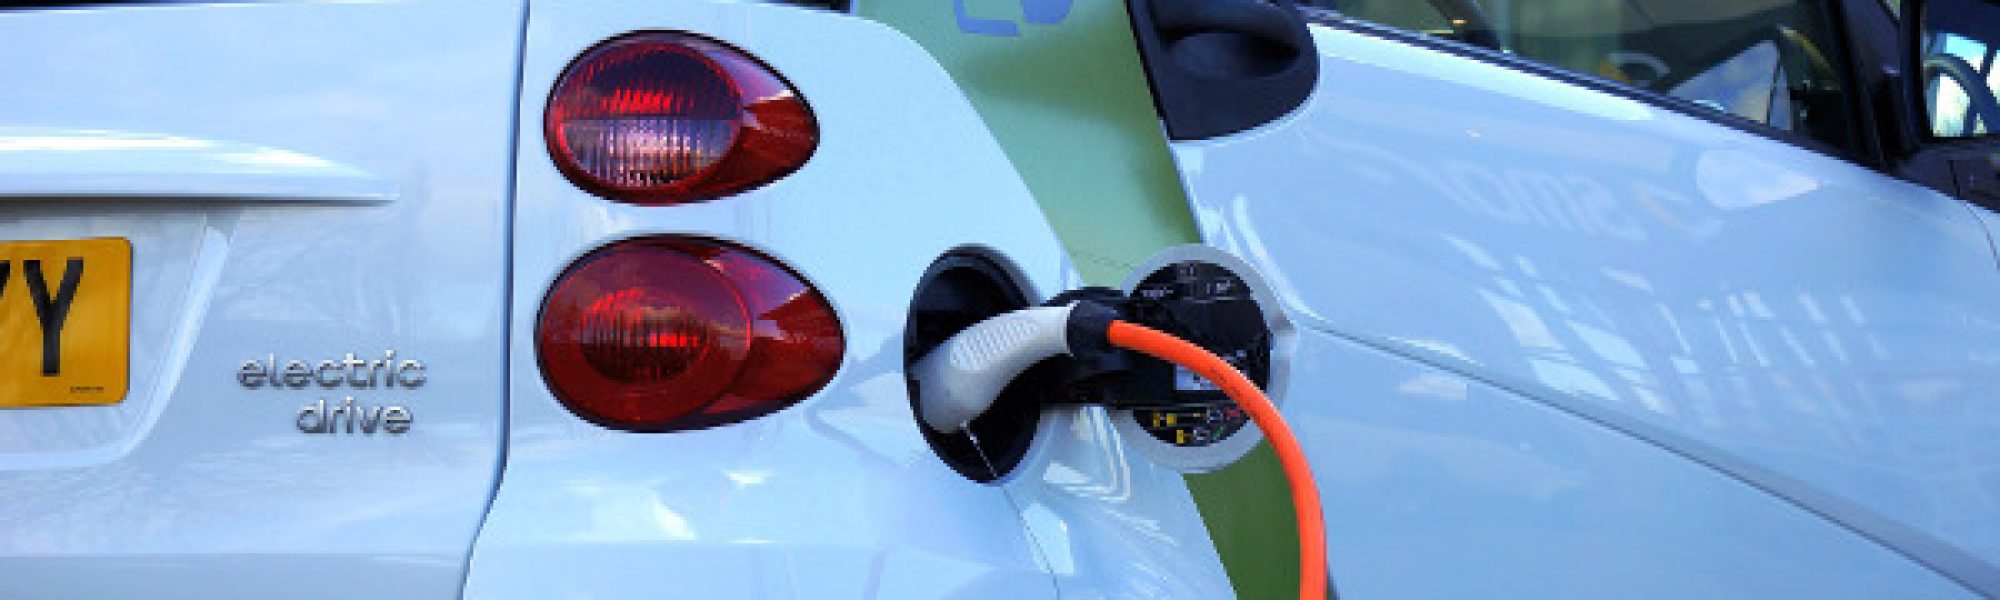 Kenya's public power company backing electric vehicles